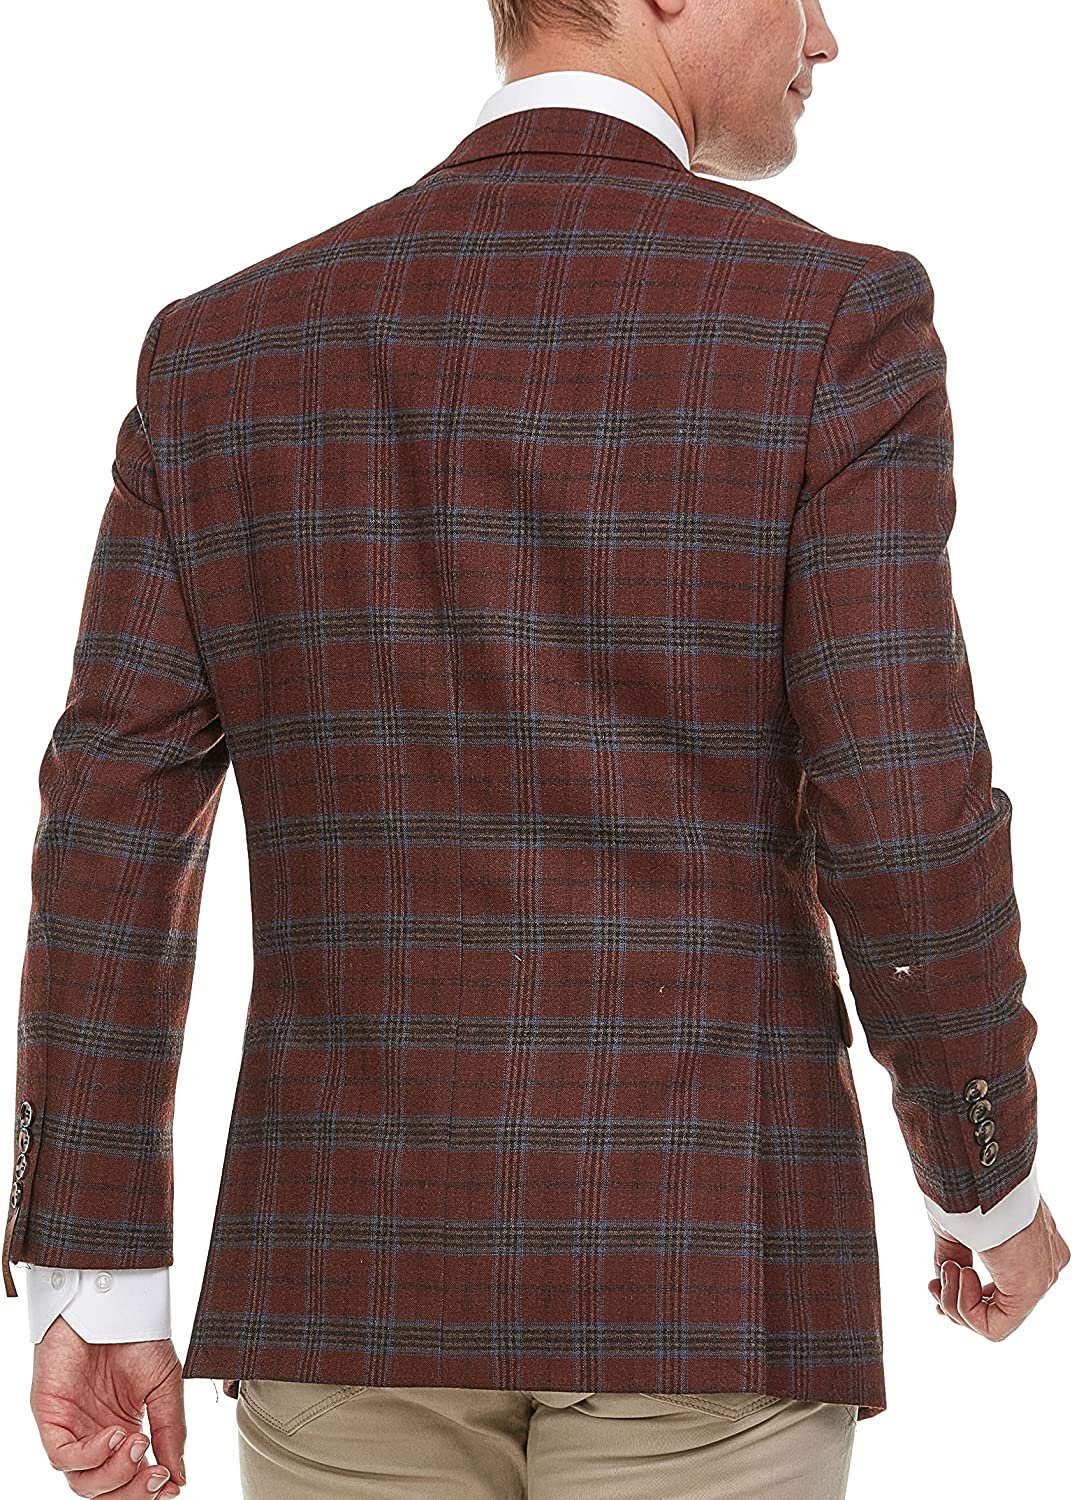 Adam Baker Men's Single Breasted 100% Wool Ultra Slim Fit Blazer/Sport Coat - Red Heather Plaid